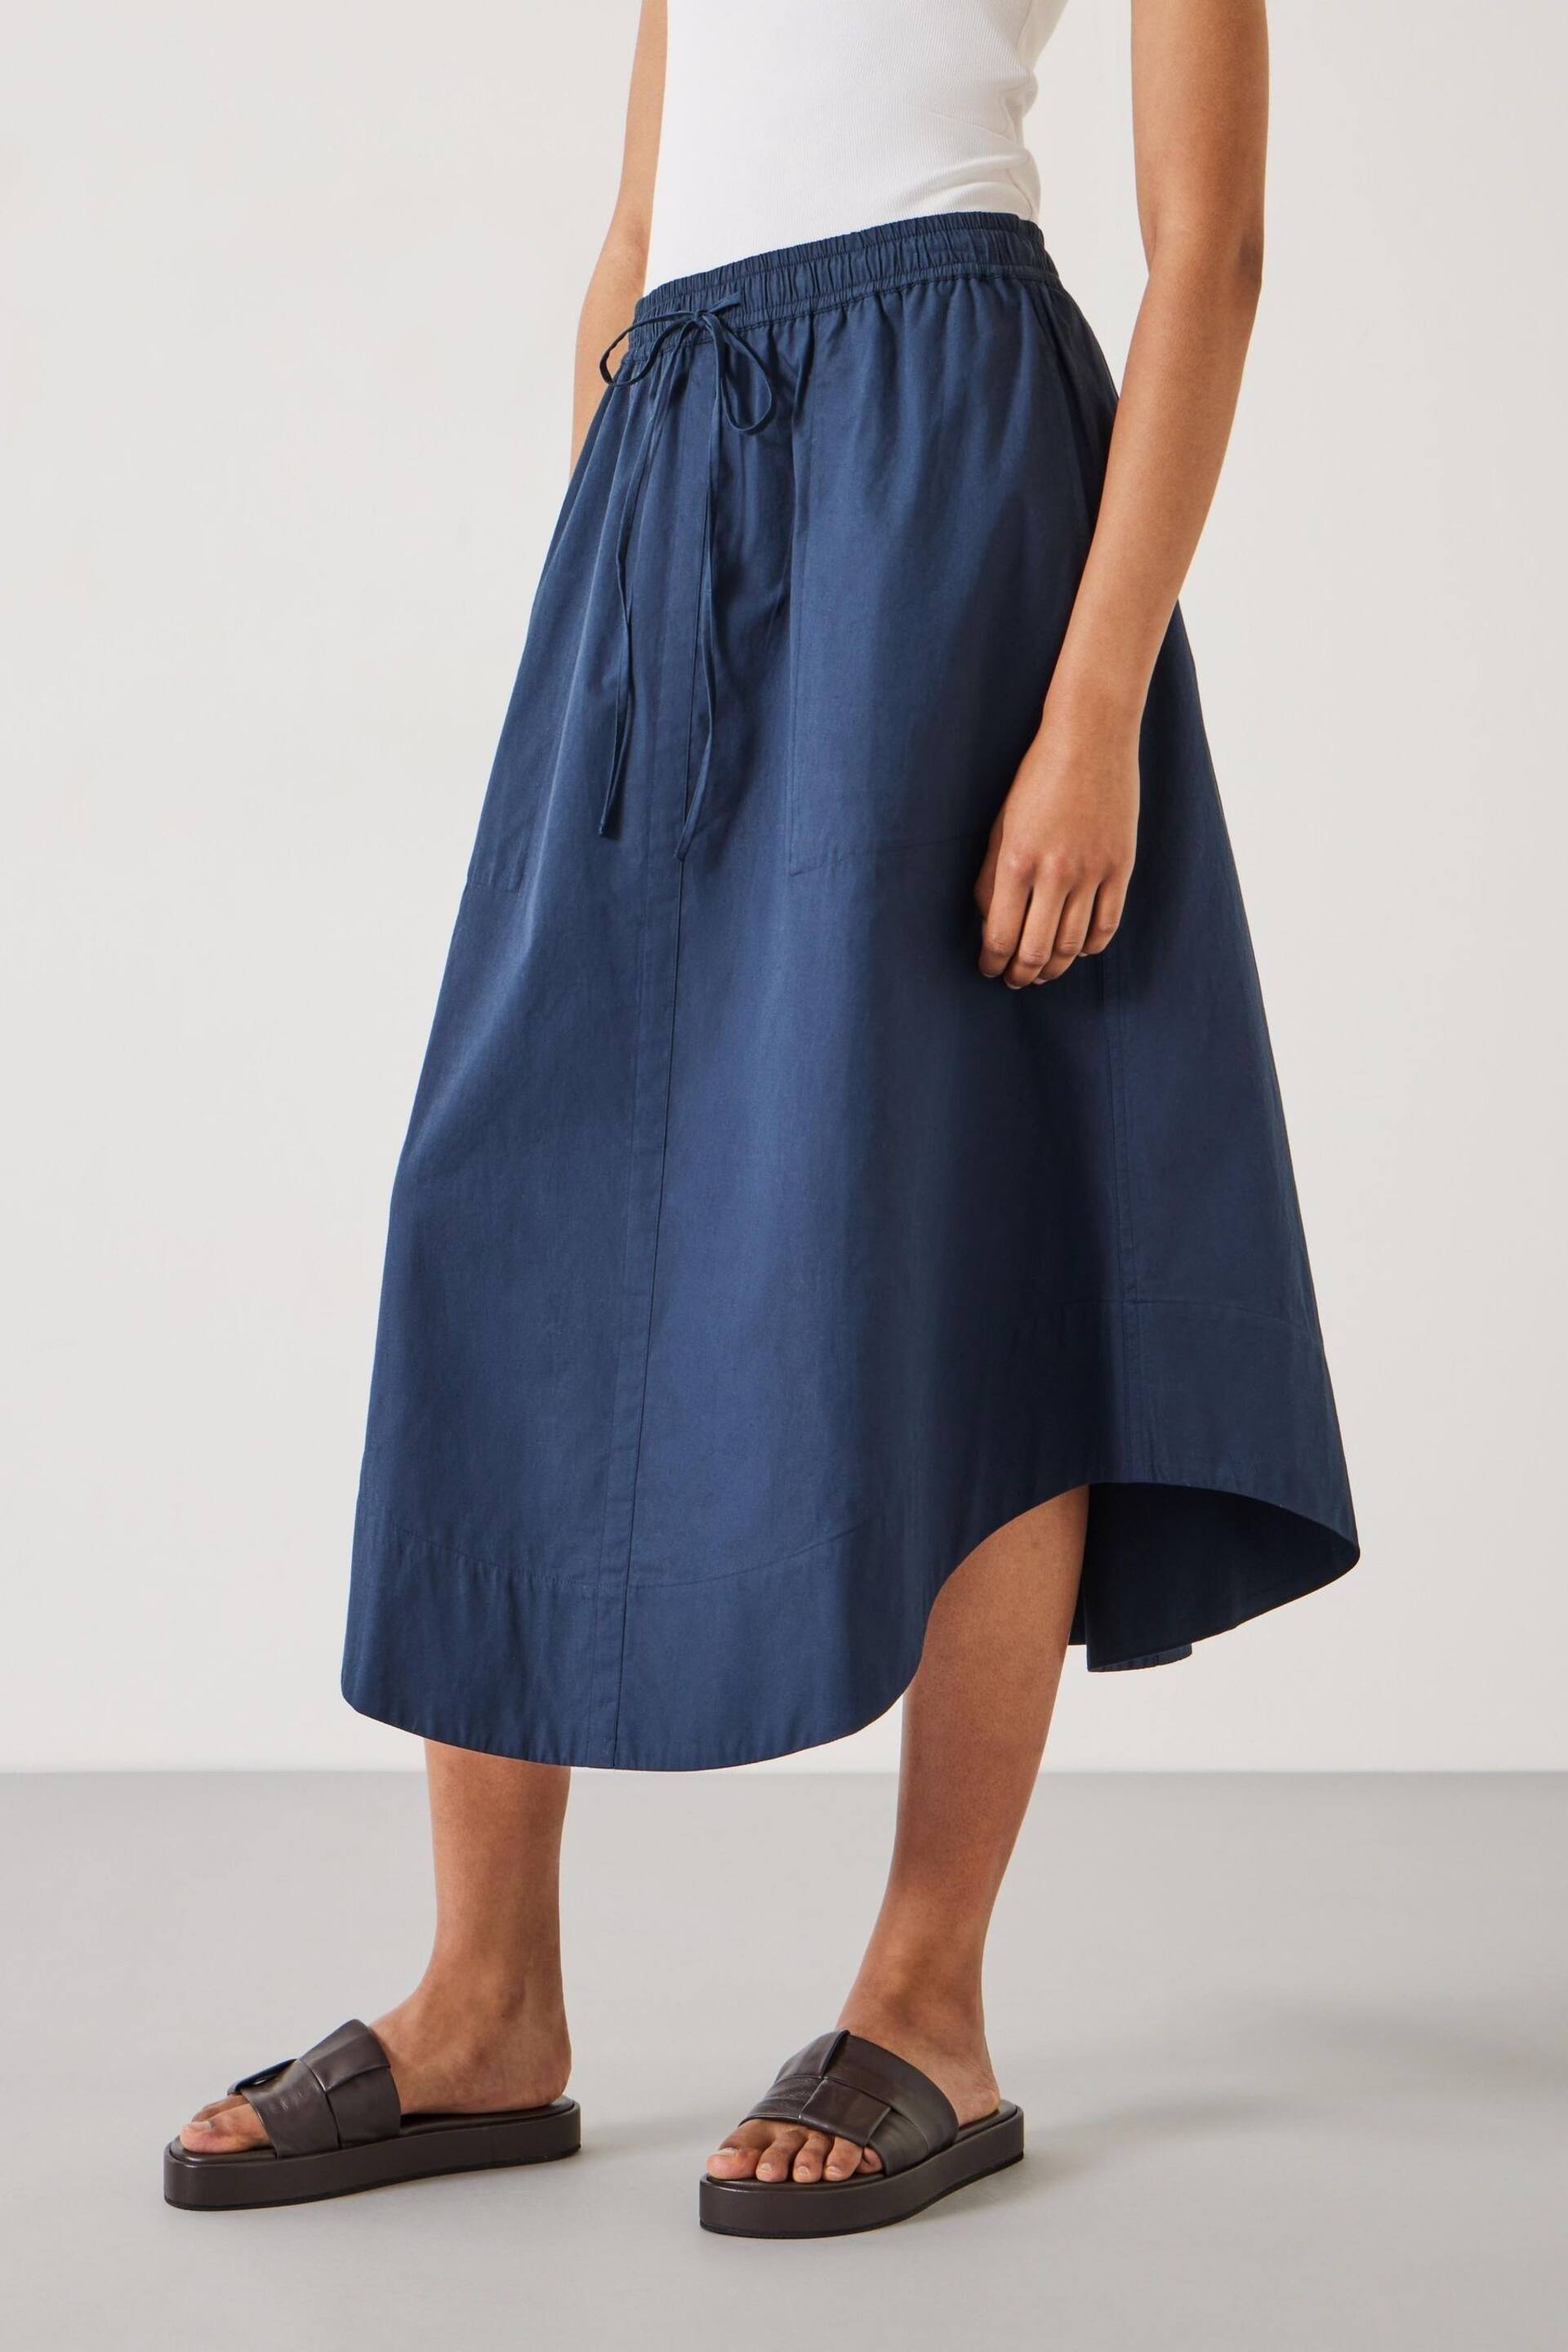 Hush Blue Kelly Curved Midi Skirts - Image 2 of 5